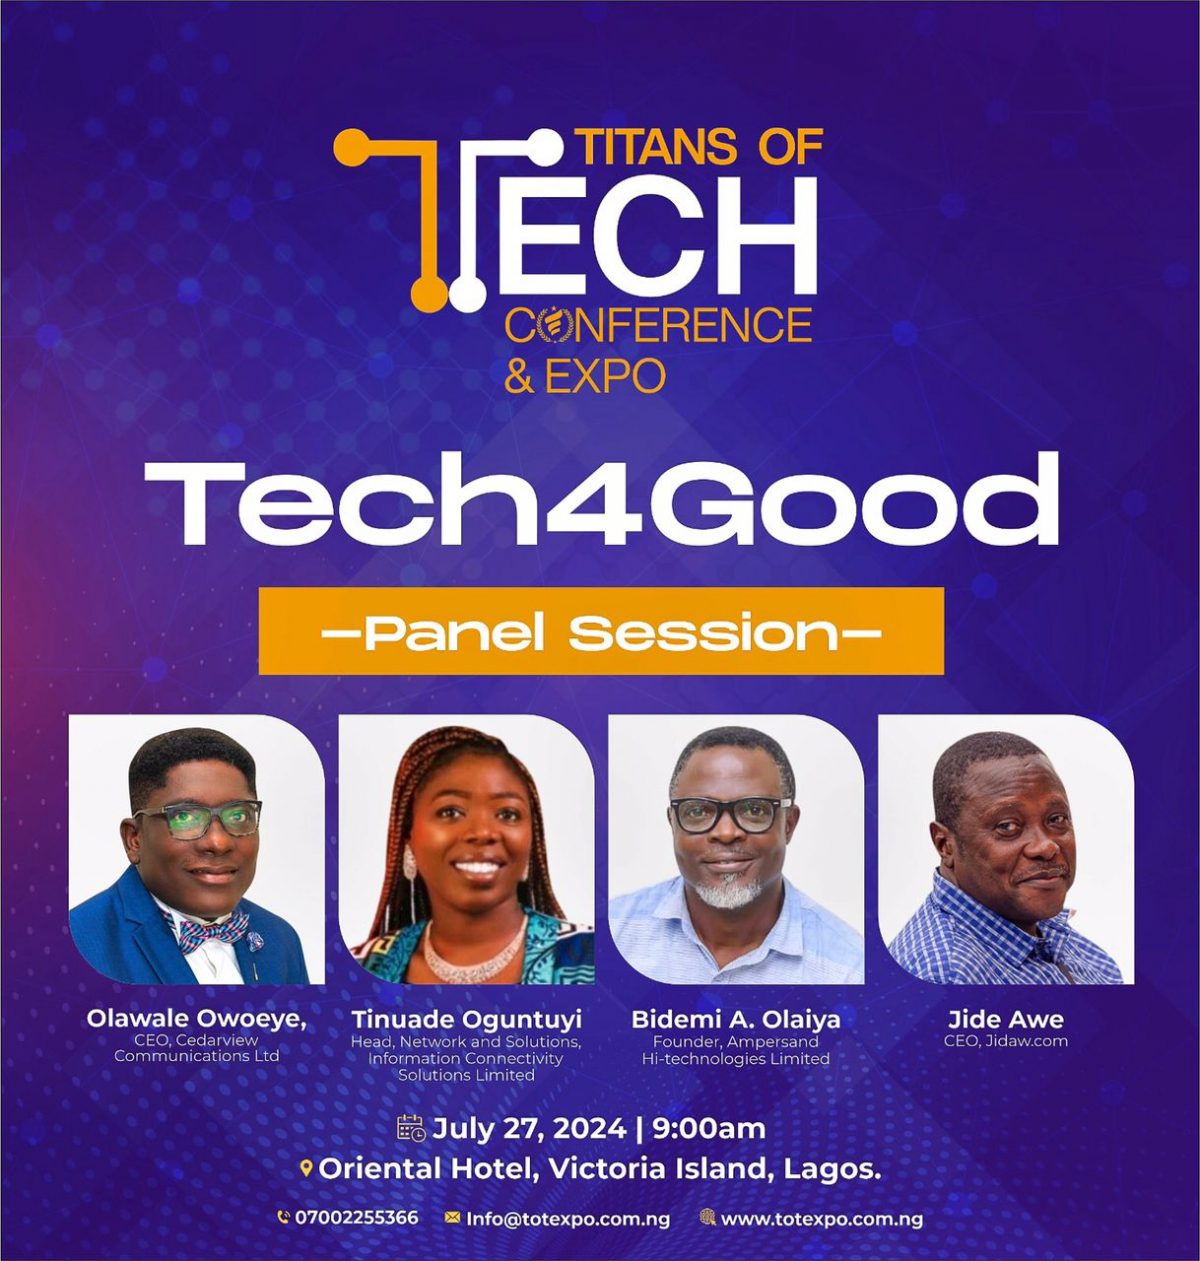 Tech4Good at Titans of Tech